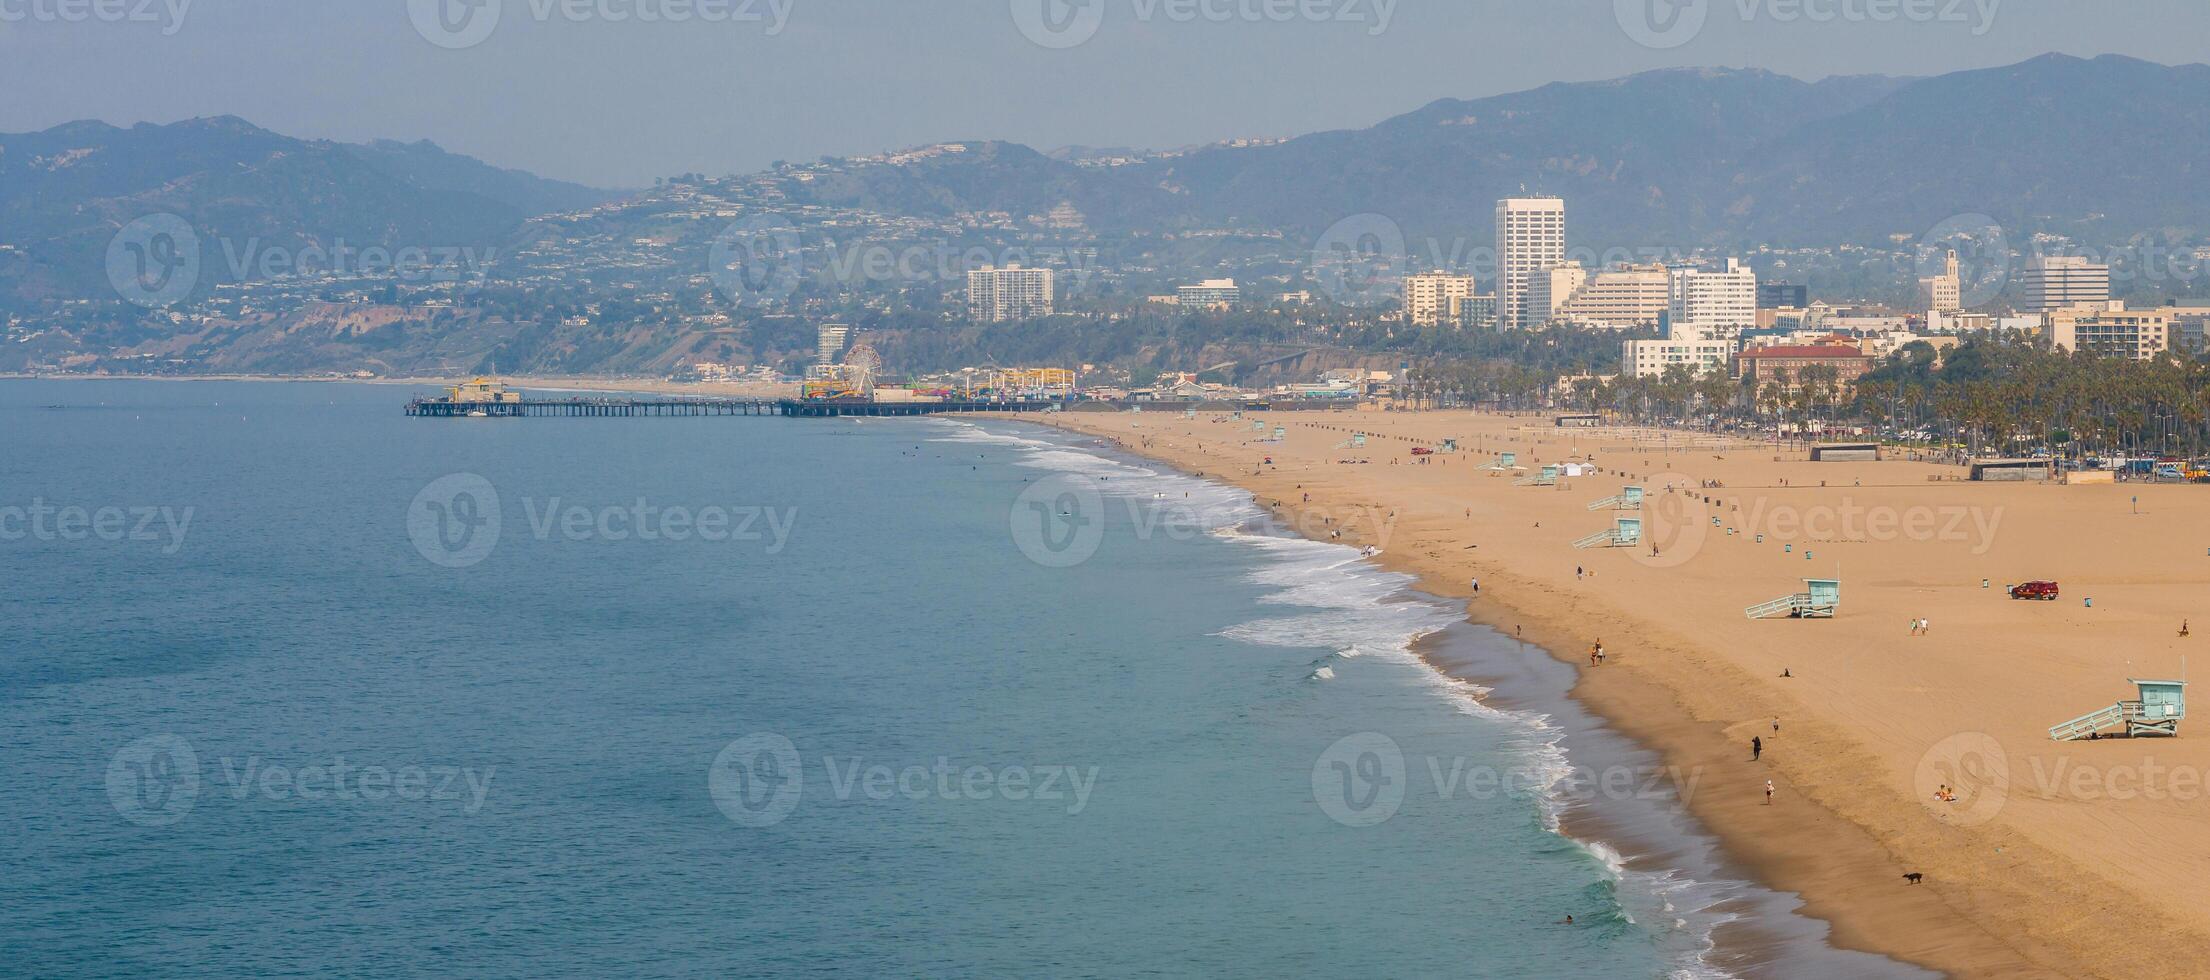 Veneza de praia los angeles Califórnia la verão azul aéreo visualizar. foto